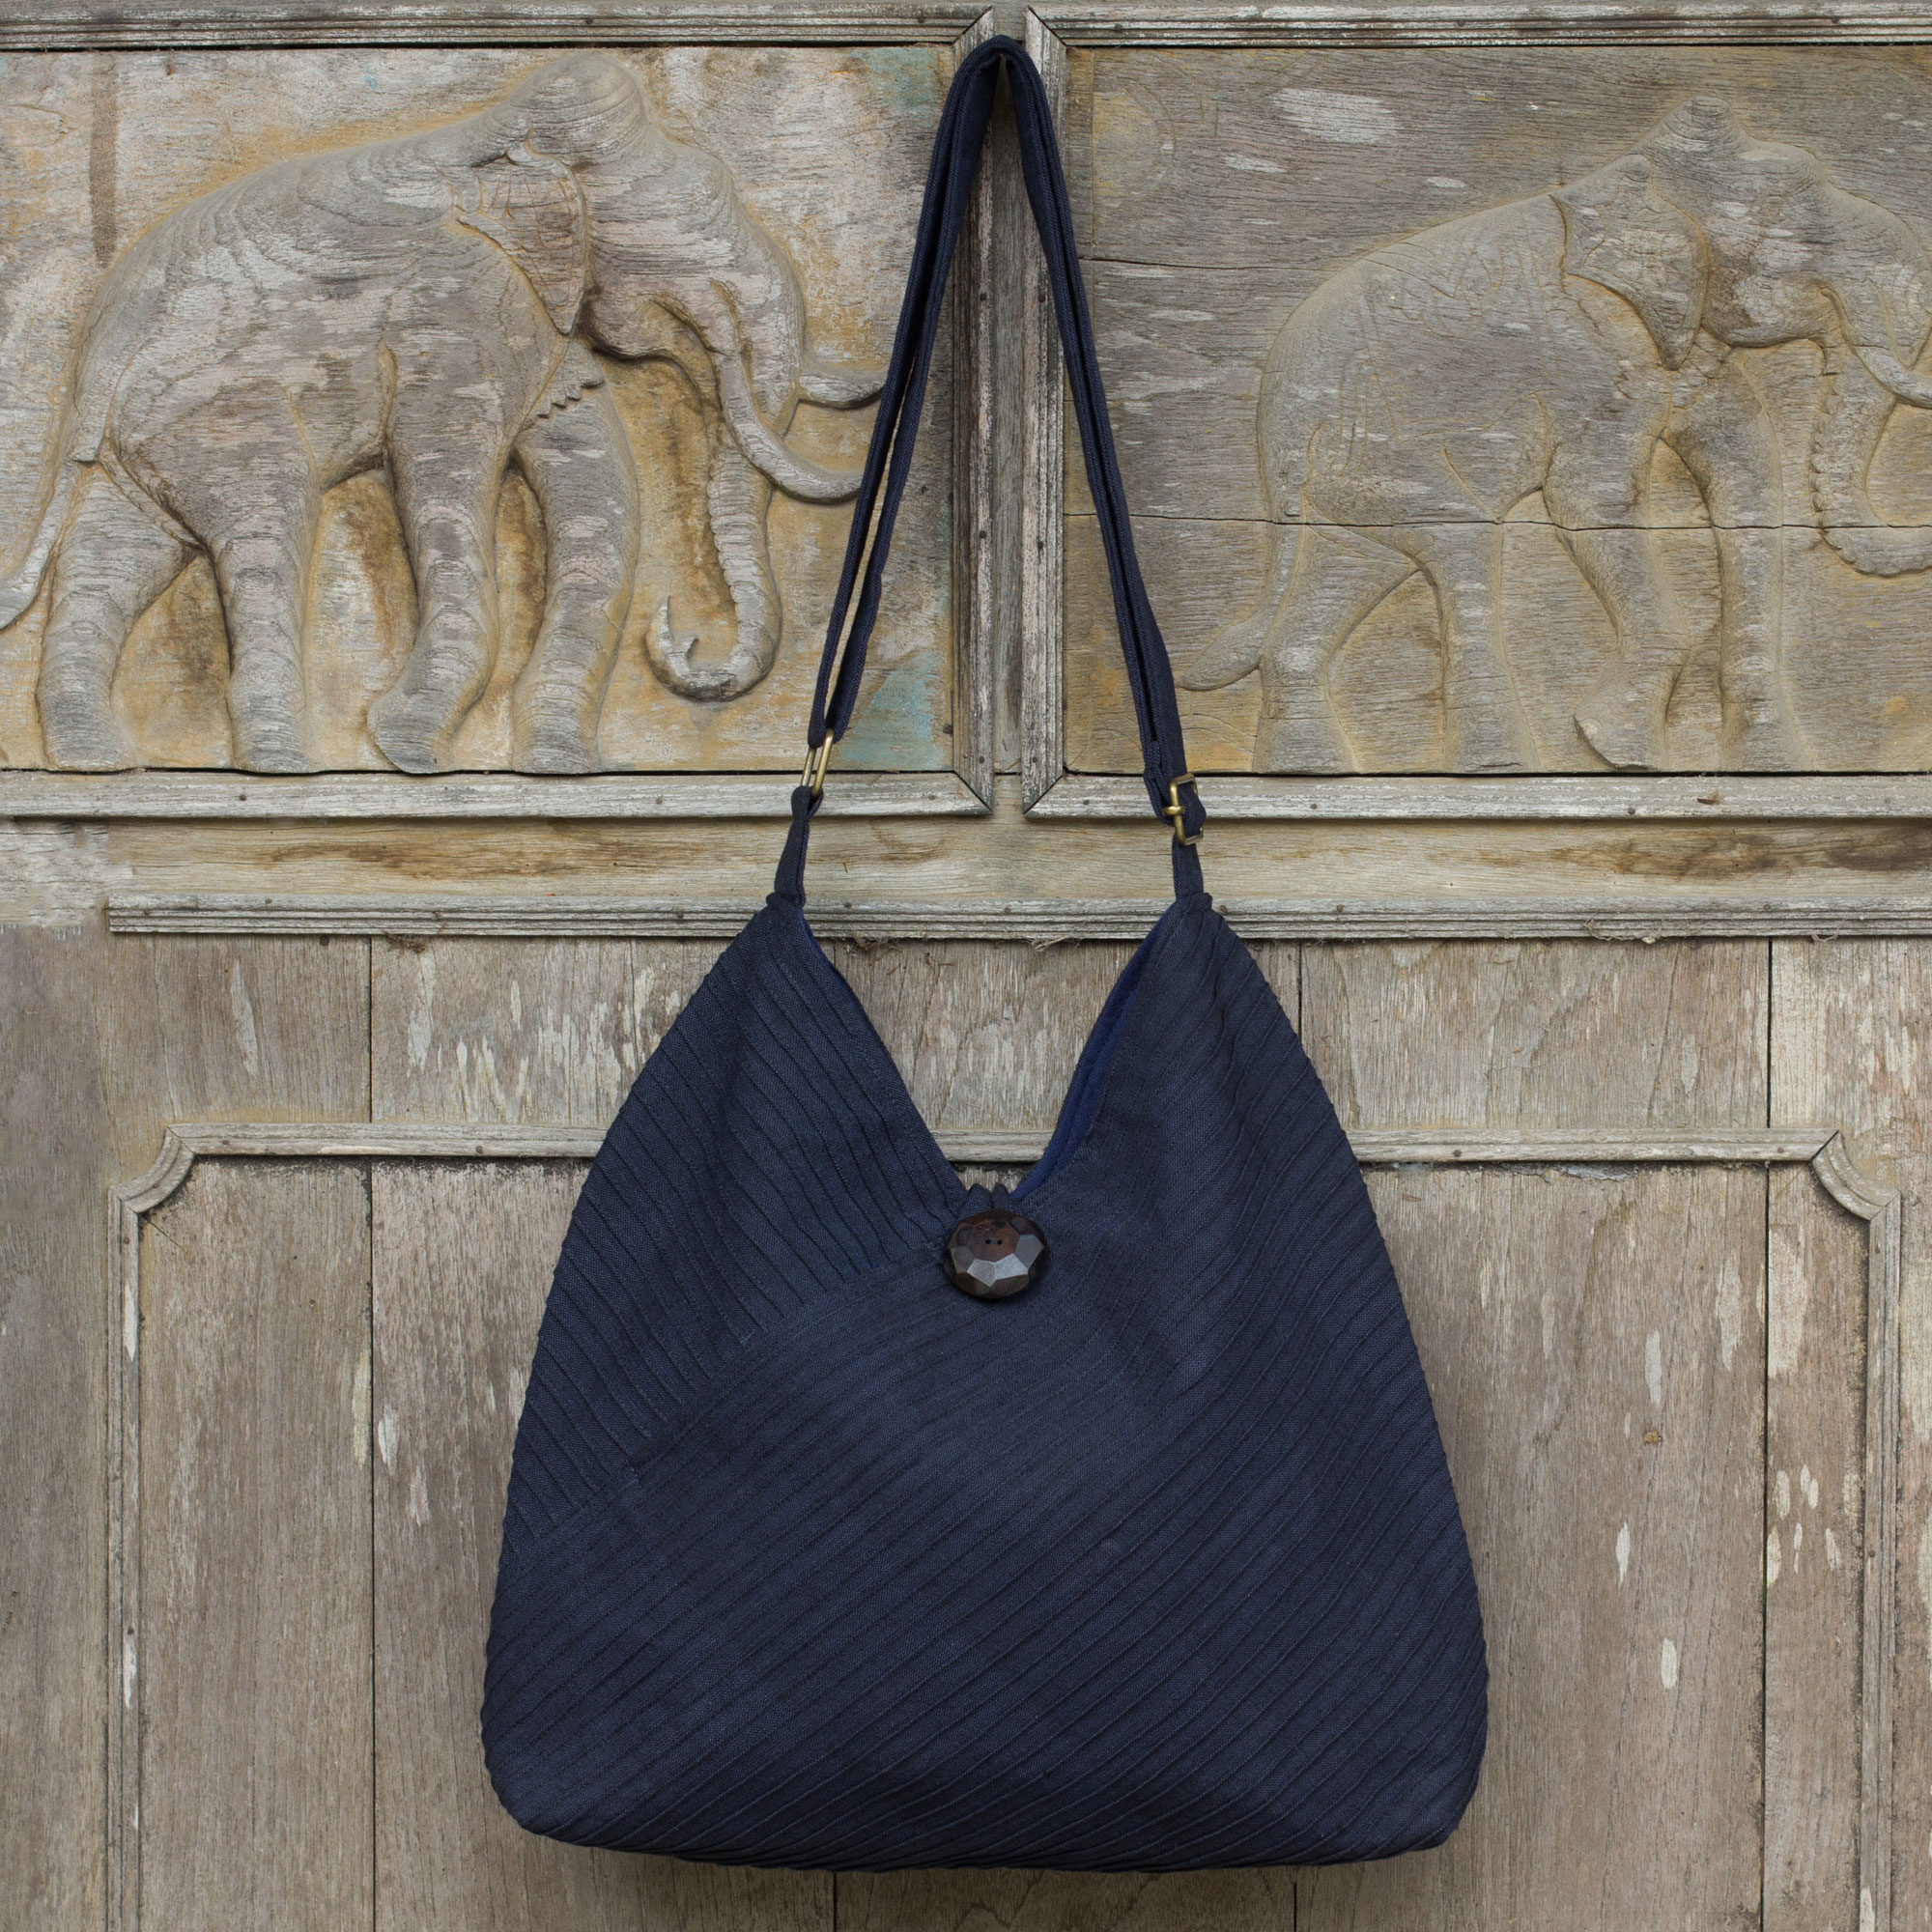 Buy Leather Hobo Bag Online in India - Etsy